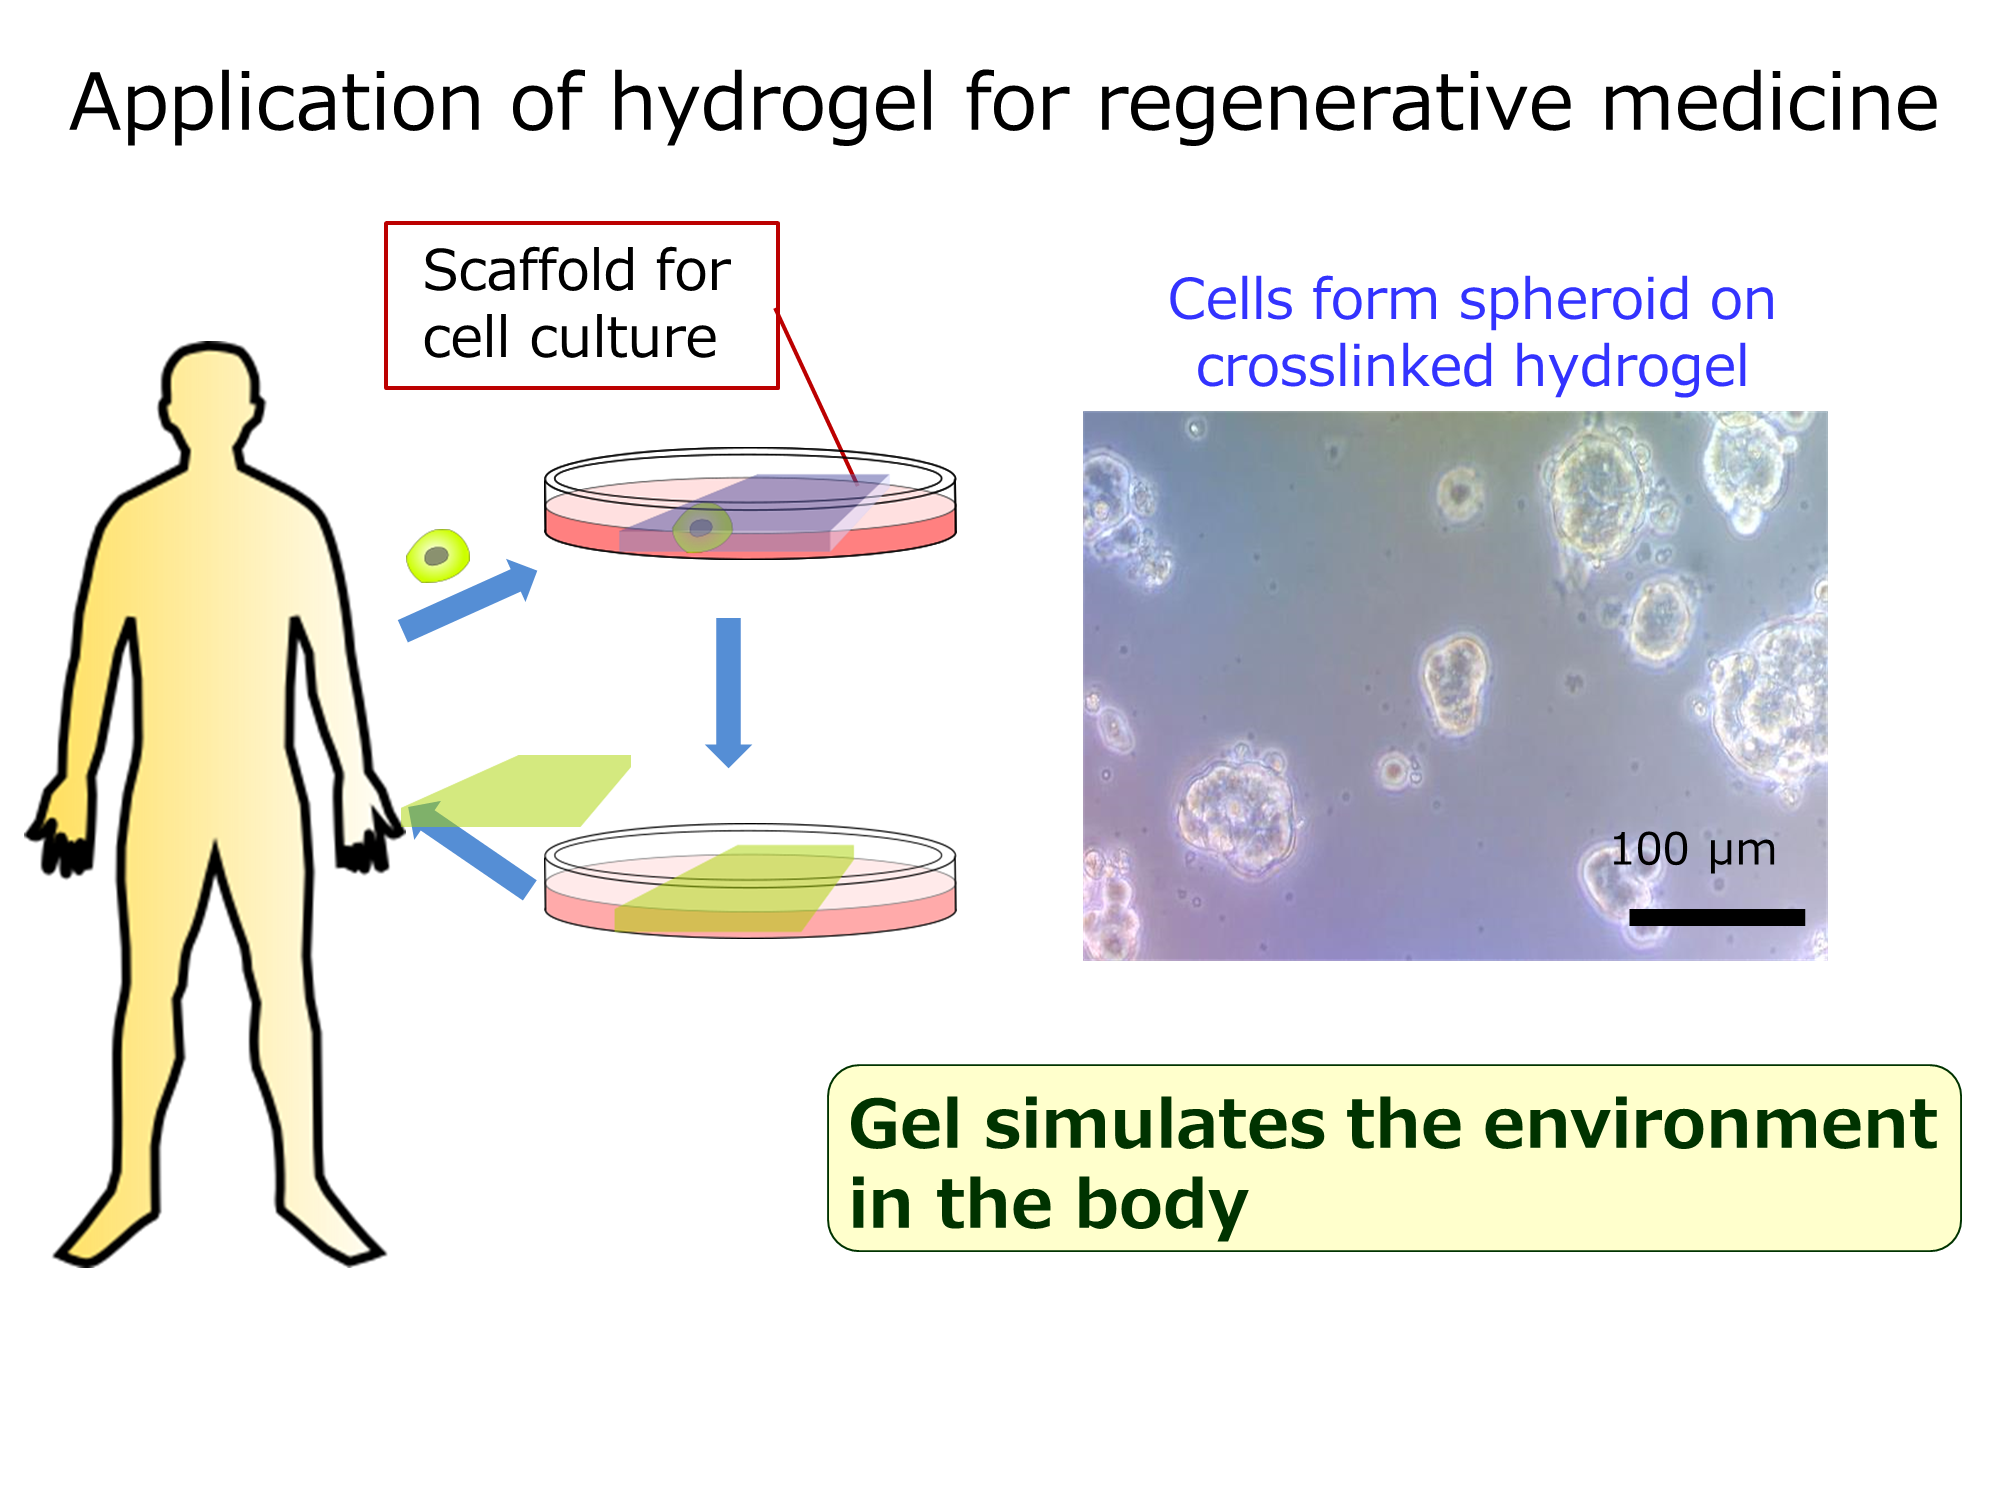 Application of hydrogel for regenerative medicineの画像